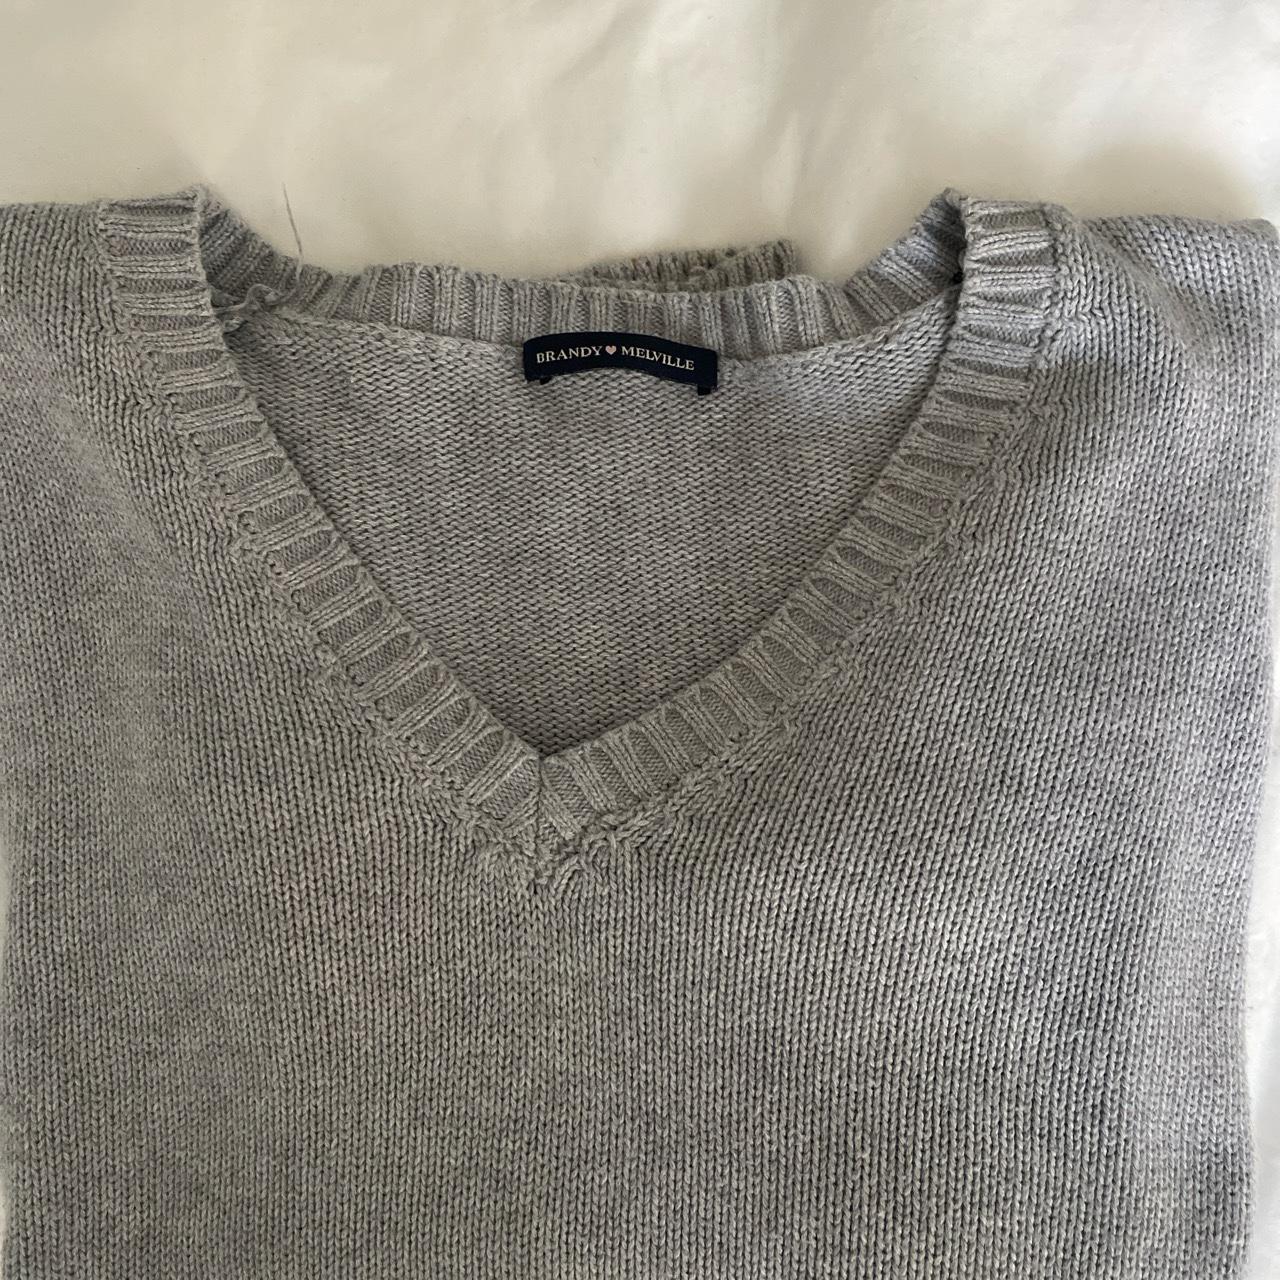 Grey knit Brandy Melville jumper // one size //... - Depop